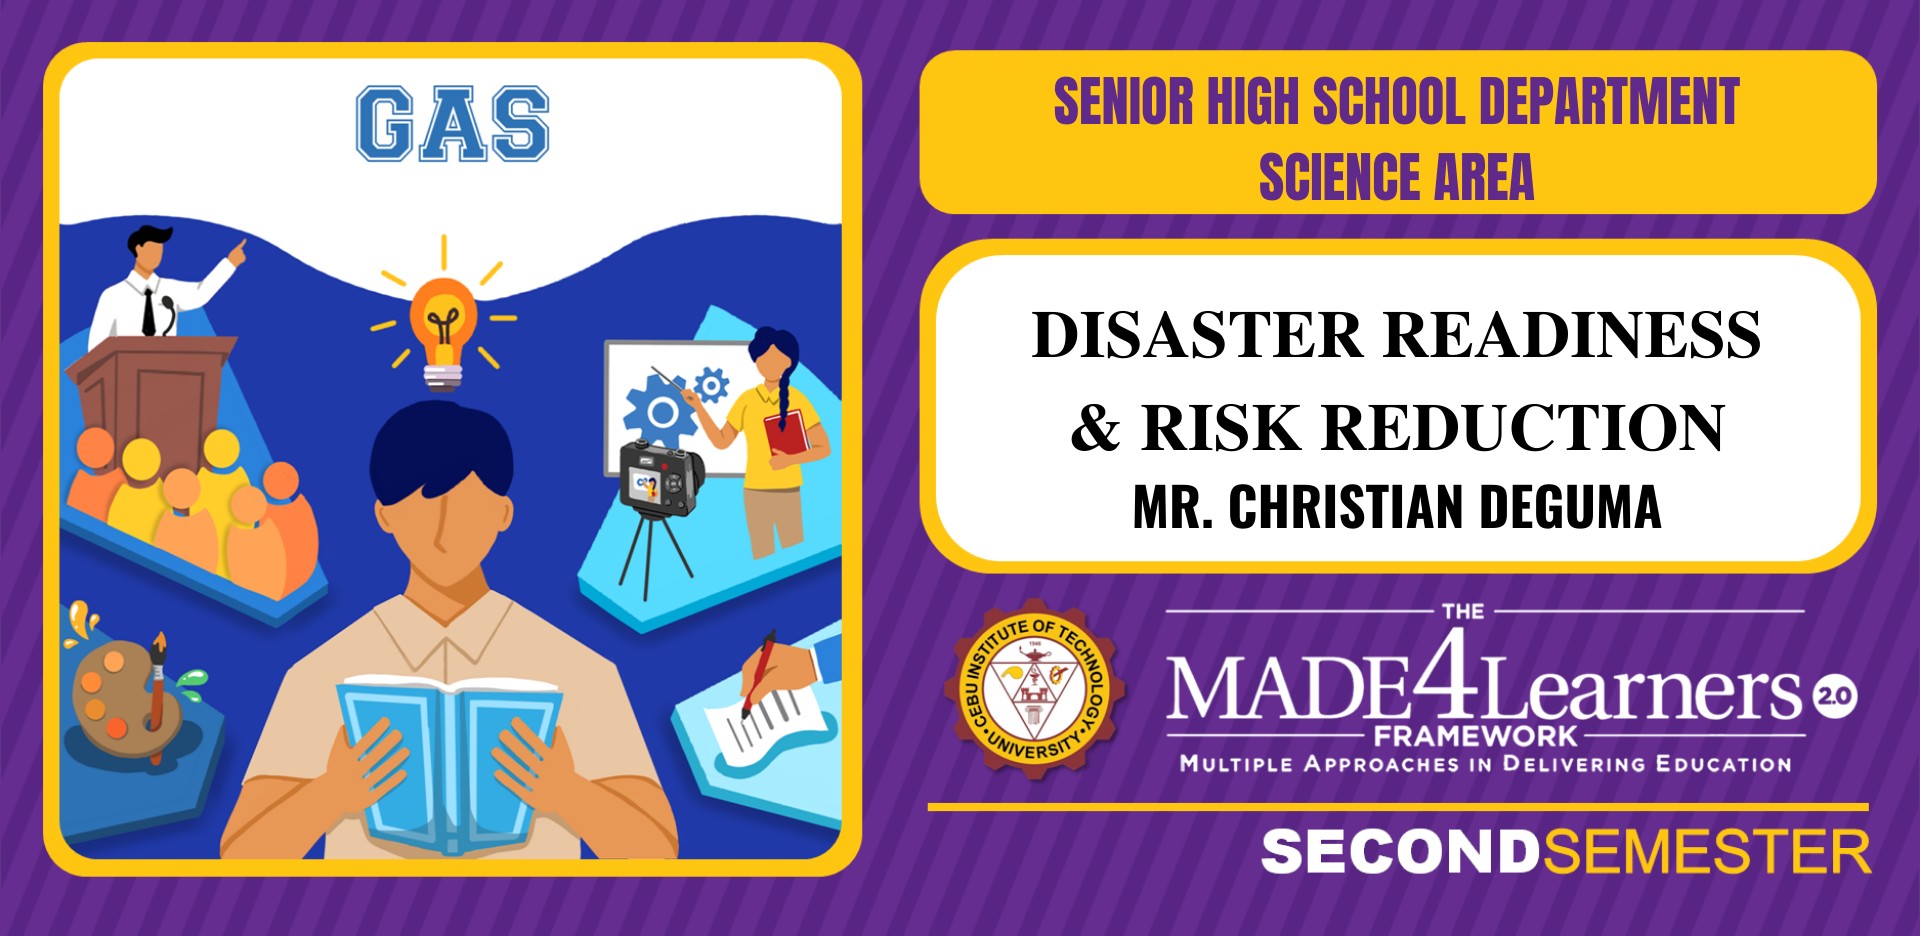 DRRR11: Disaster Readiness and Risk Reduction (Deguma)